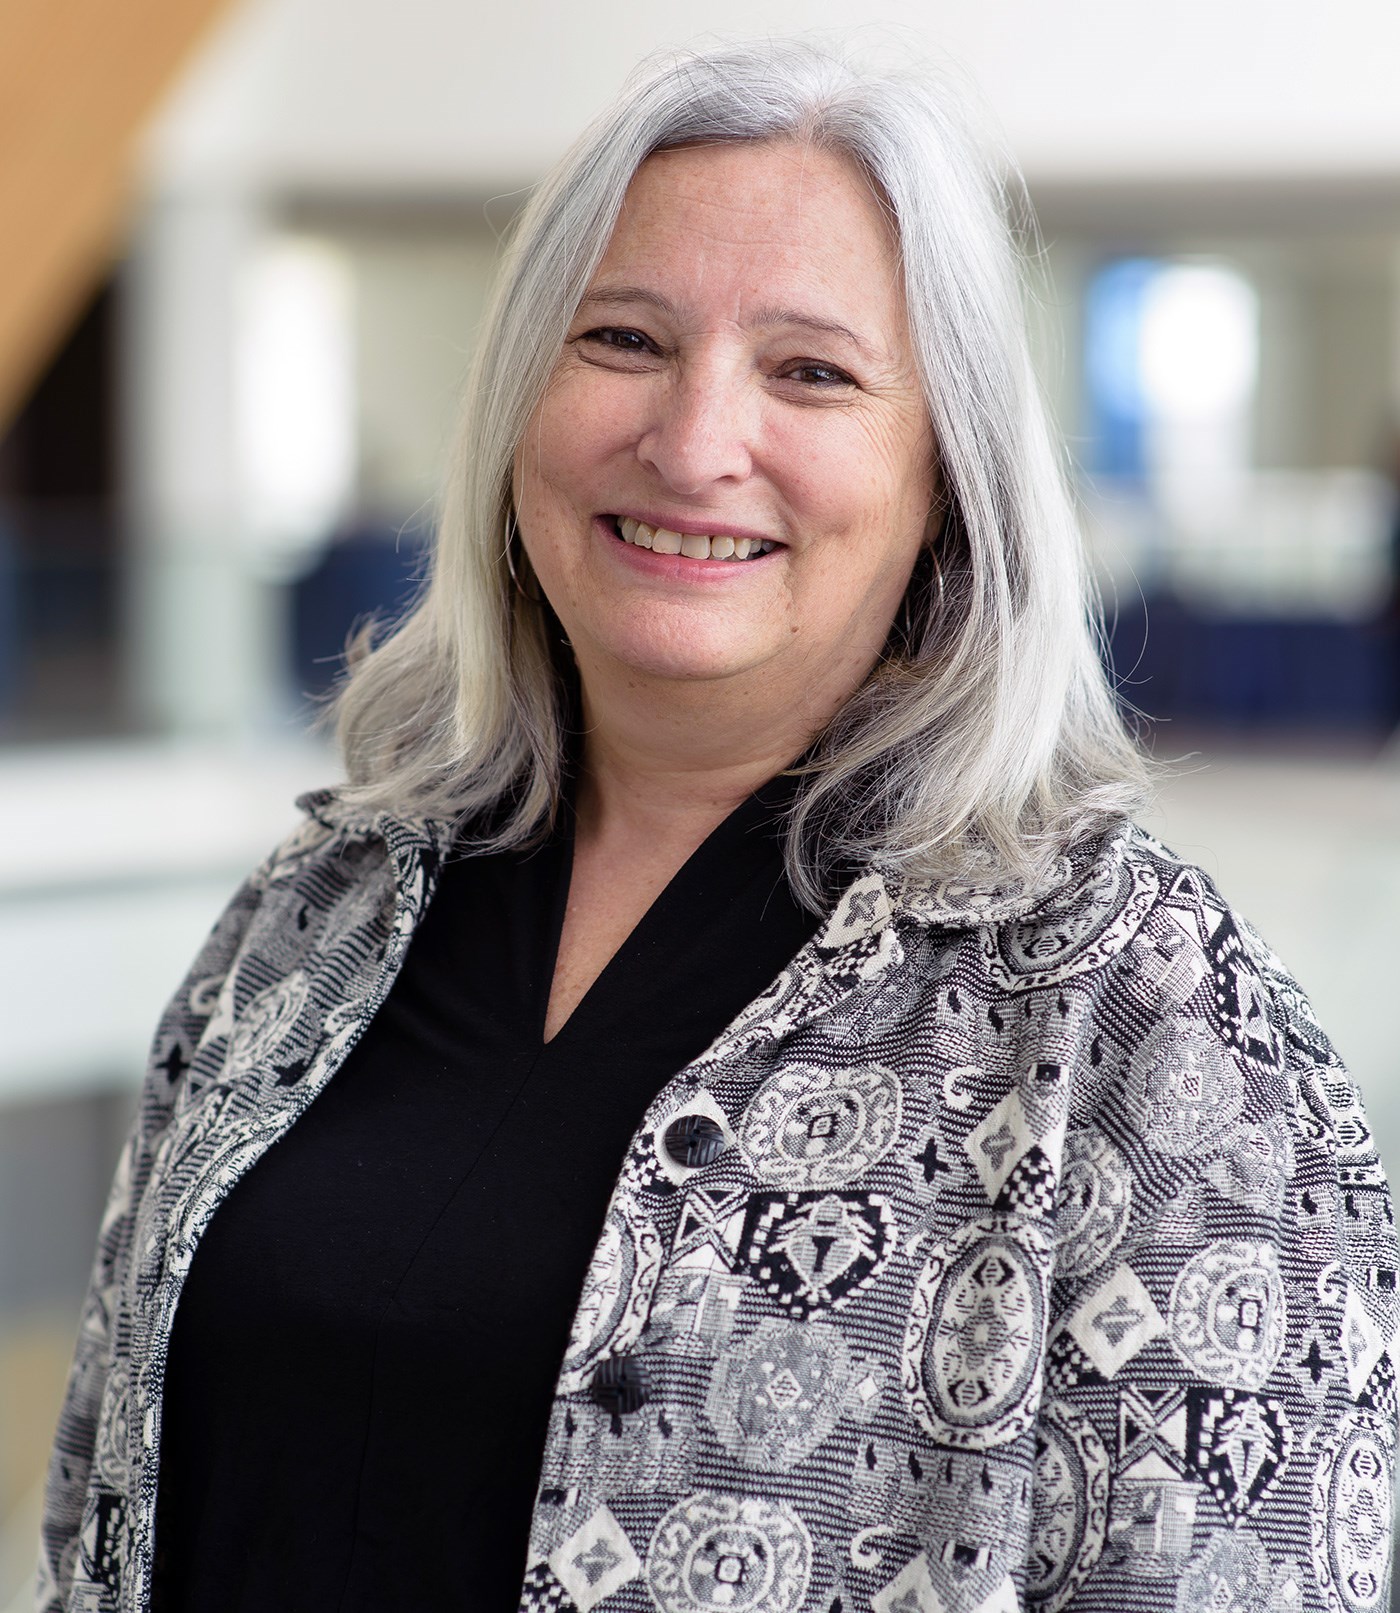 Susan J. Braunhut is Professor Emeritus, Distinguished University Professor in the Biological Sciences department at UMass Lowell.